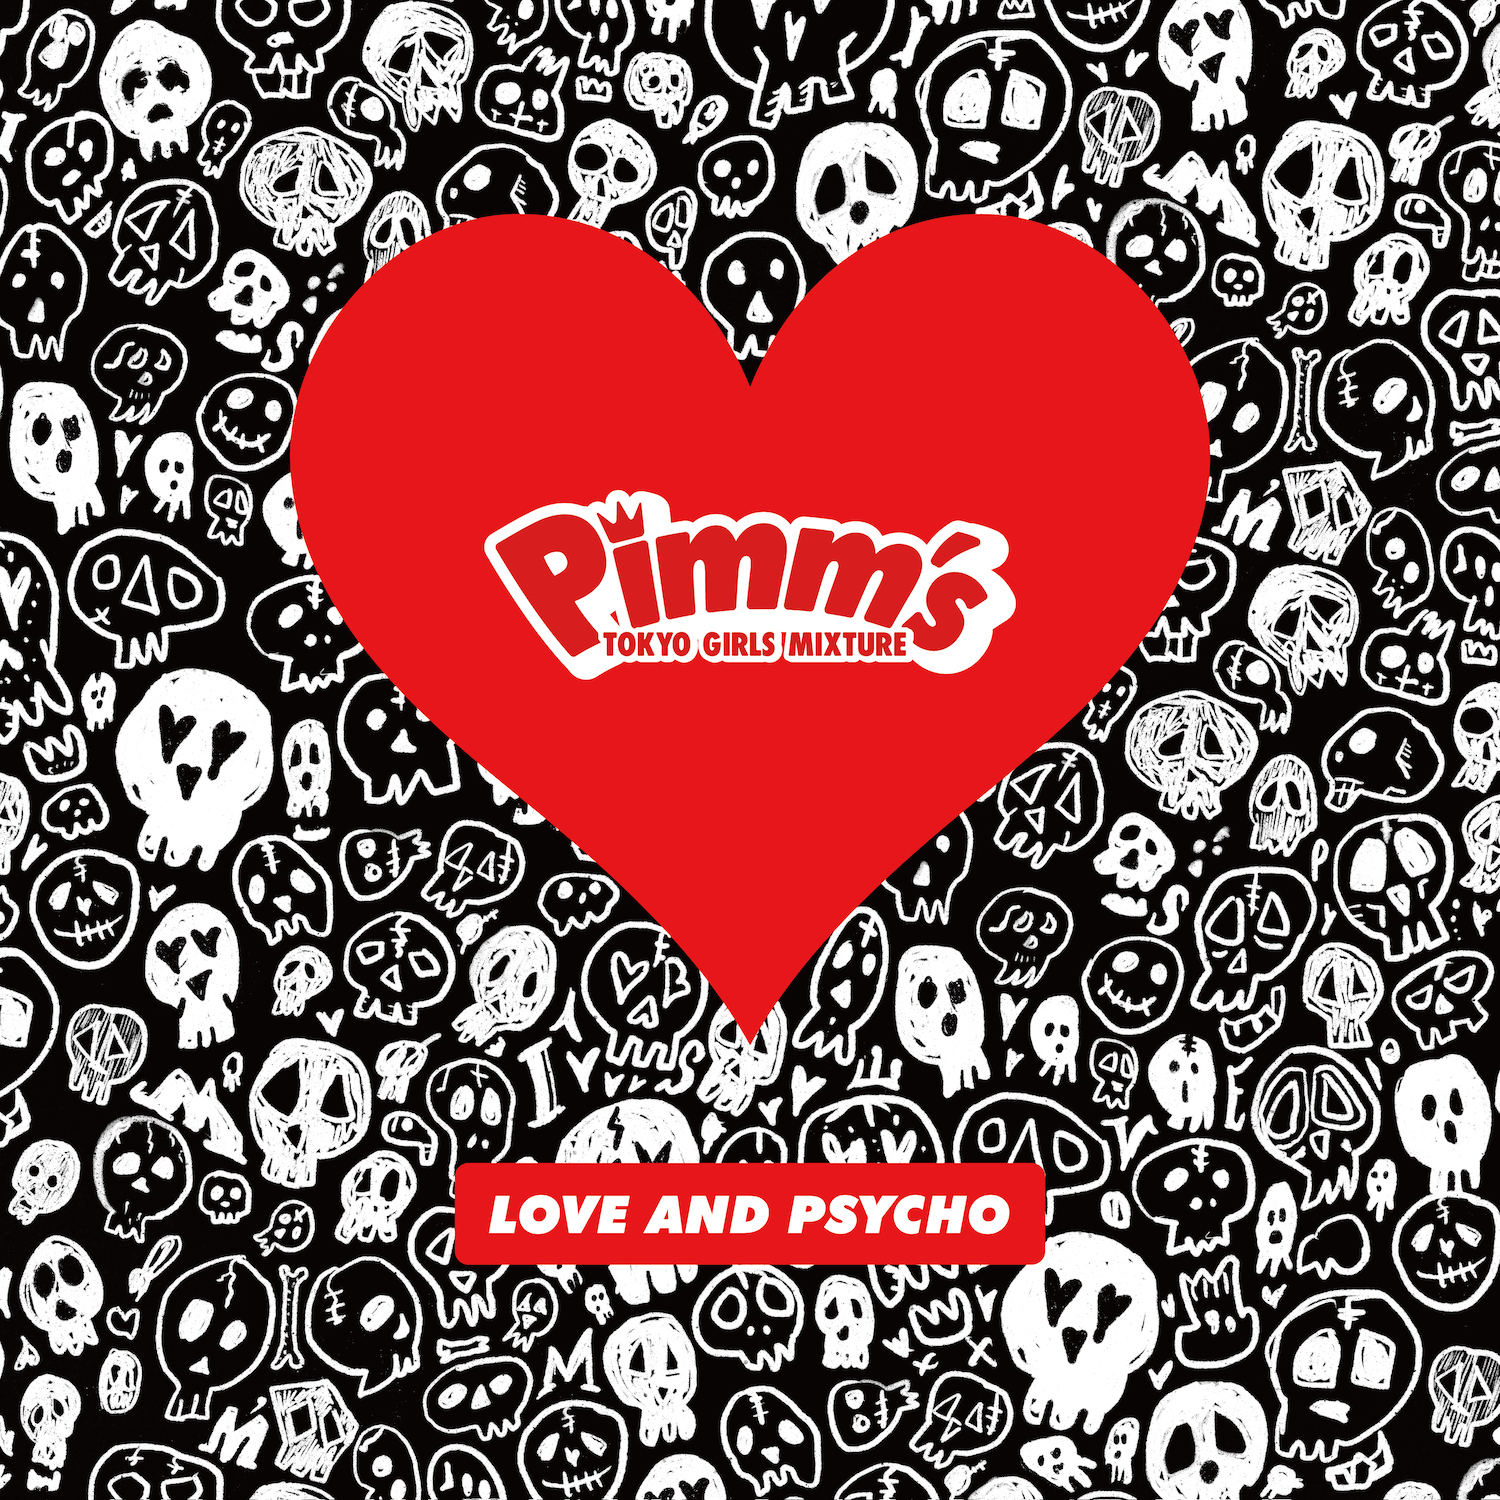 Pimm’s・2nd MiniAlbum「LOVE AND PSYCHO」